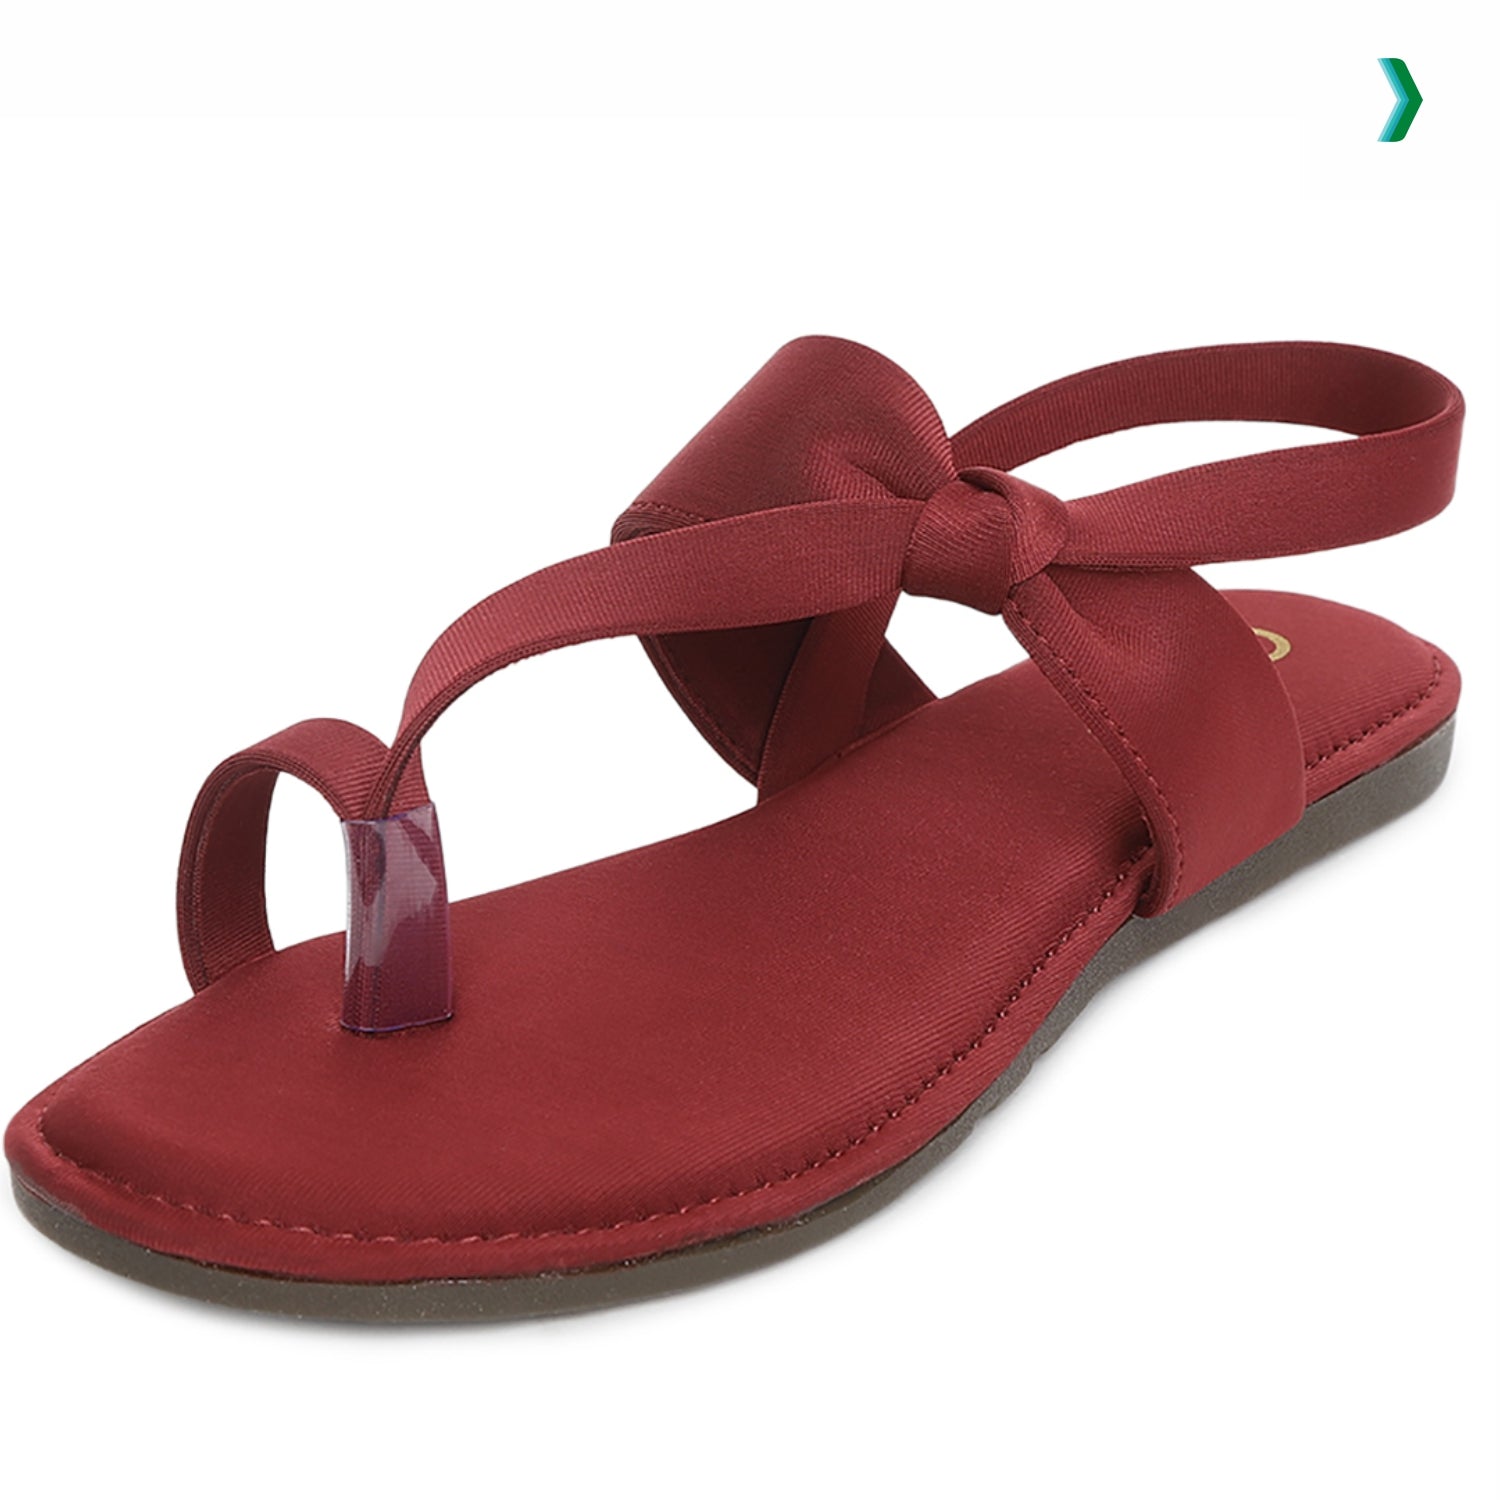 ORTHO JOY Fancy doctor Stylish Casual slippers for women